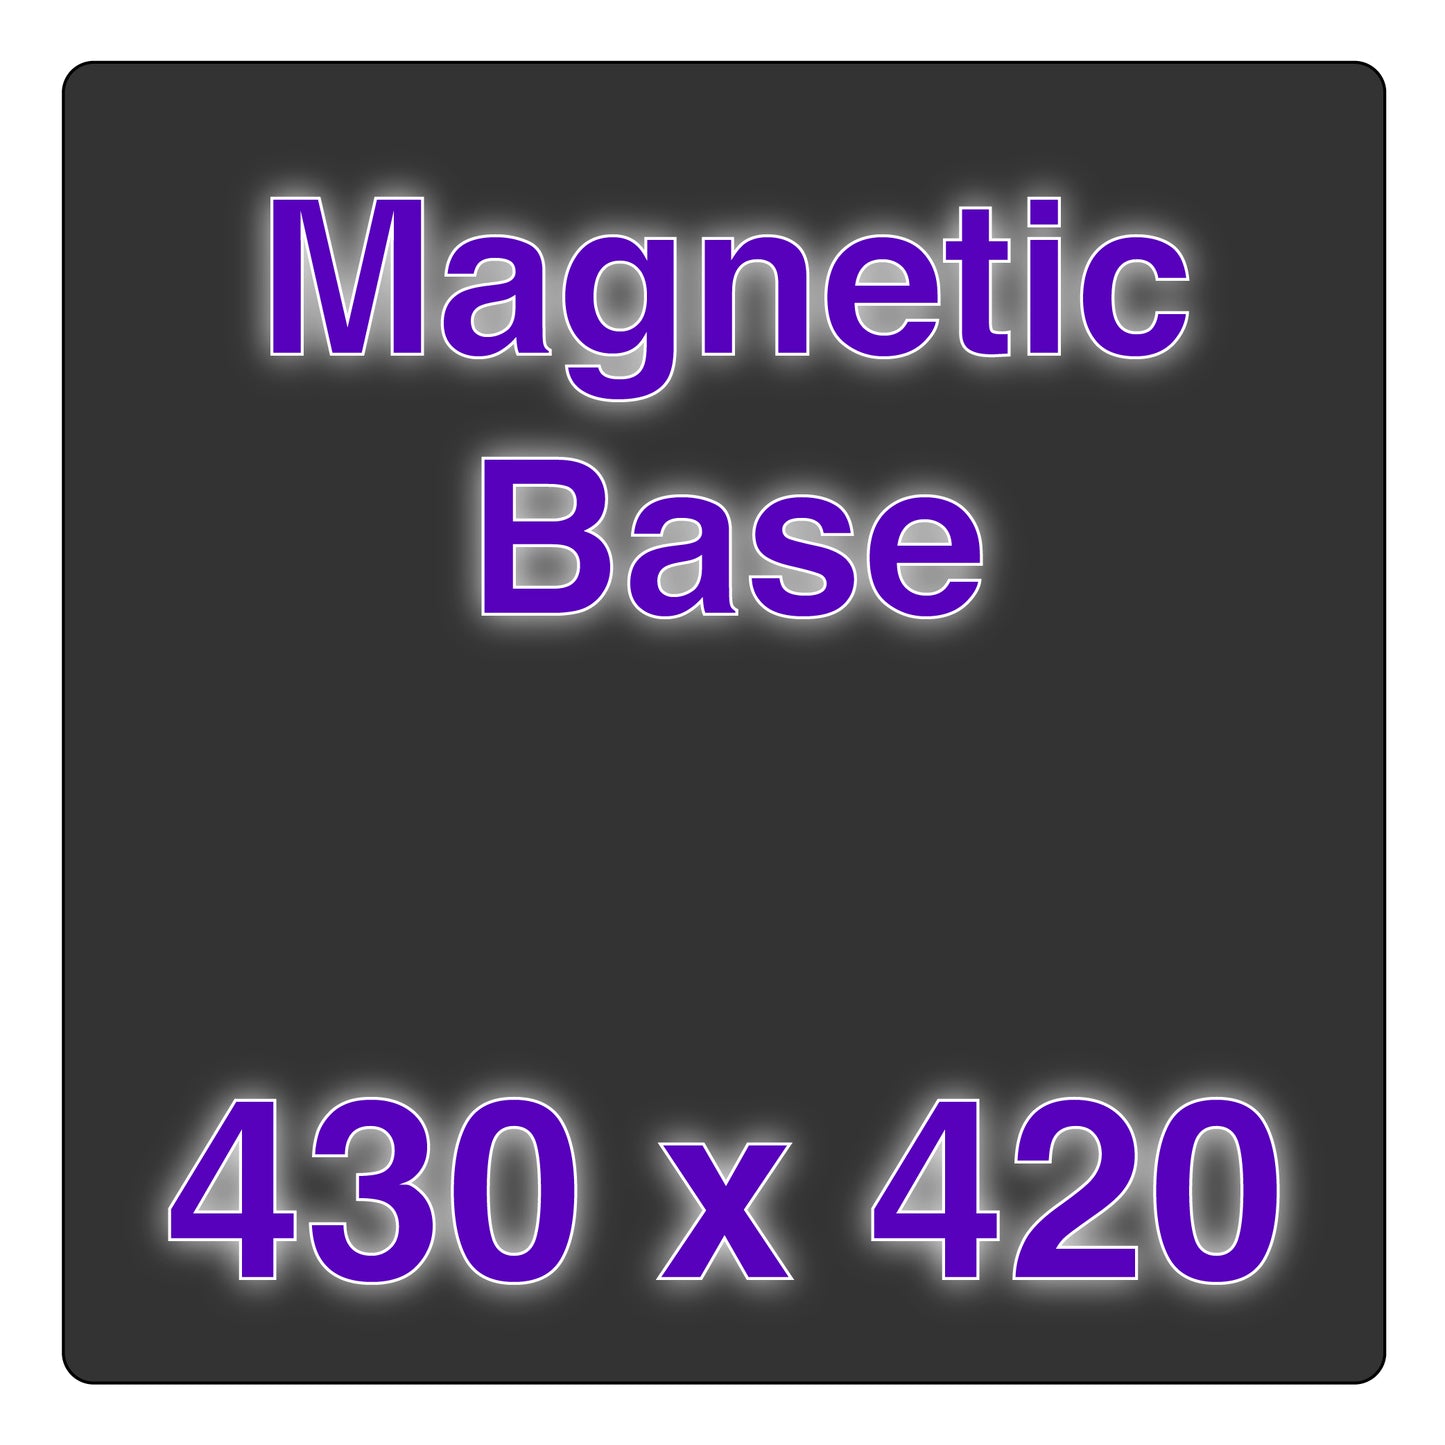 Magnetic Base - 430 x 420